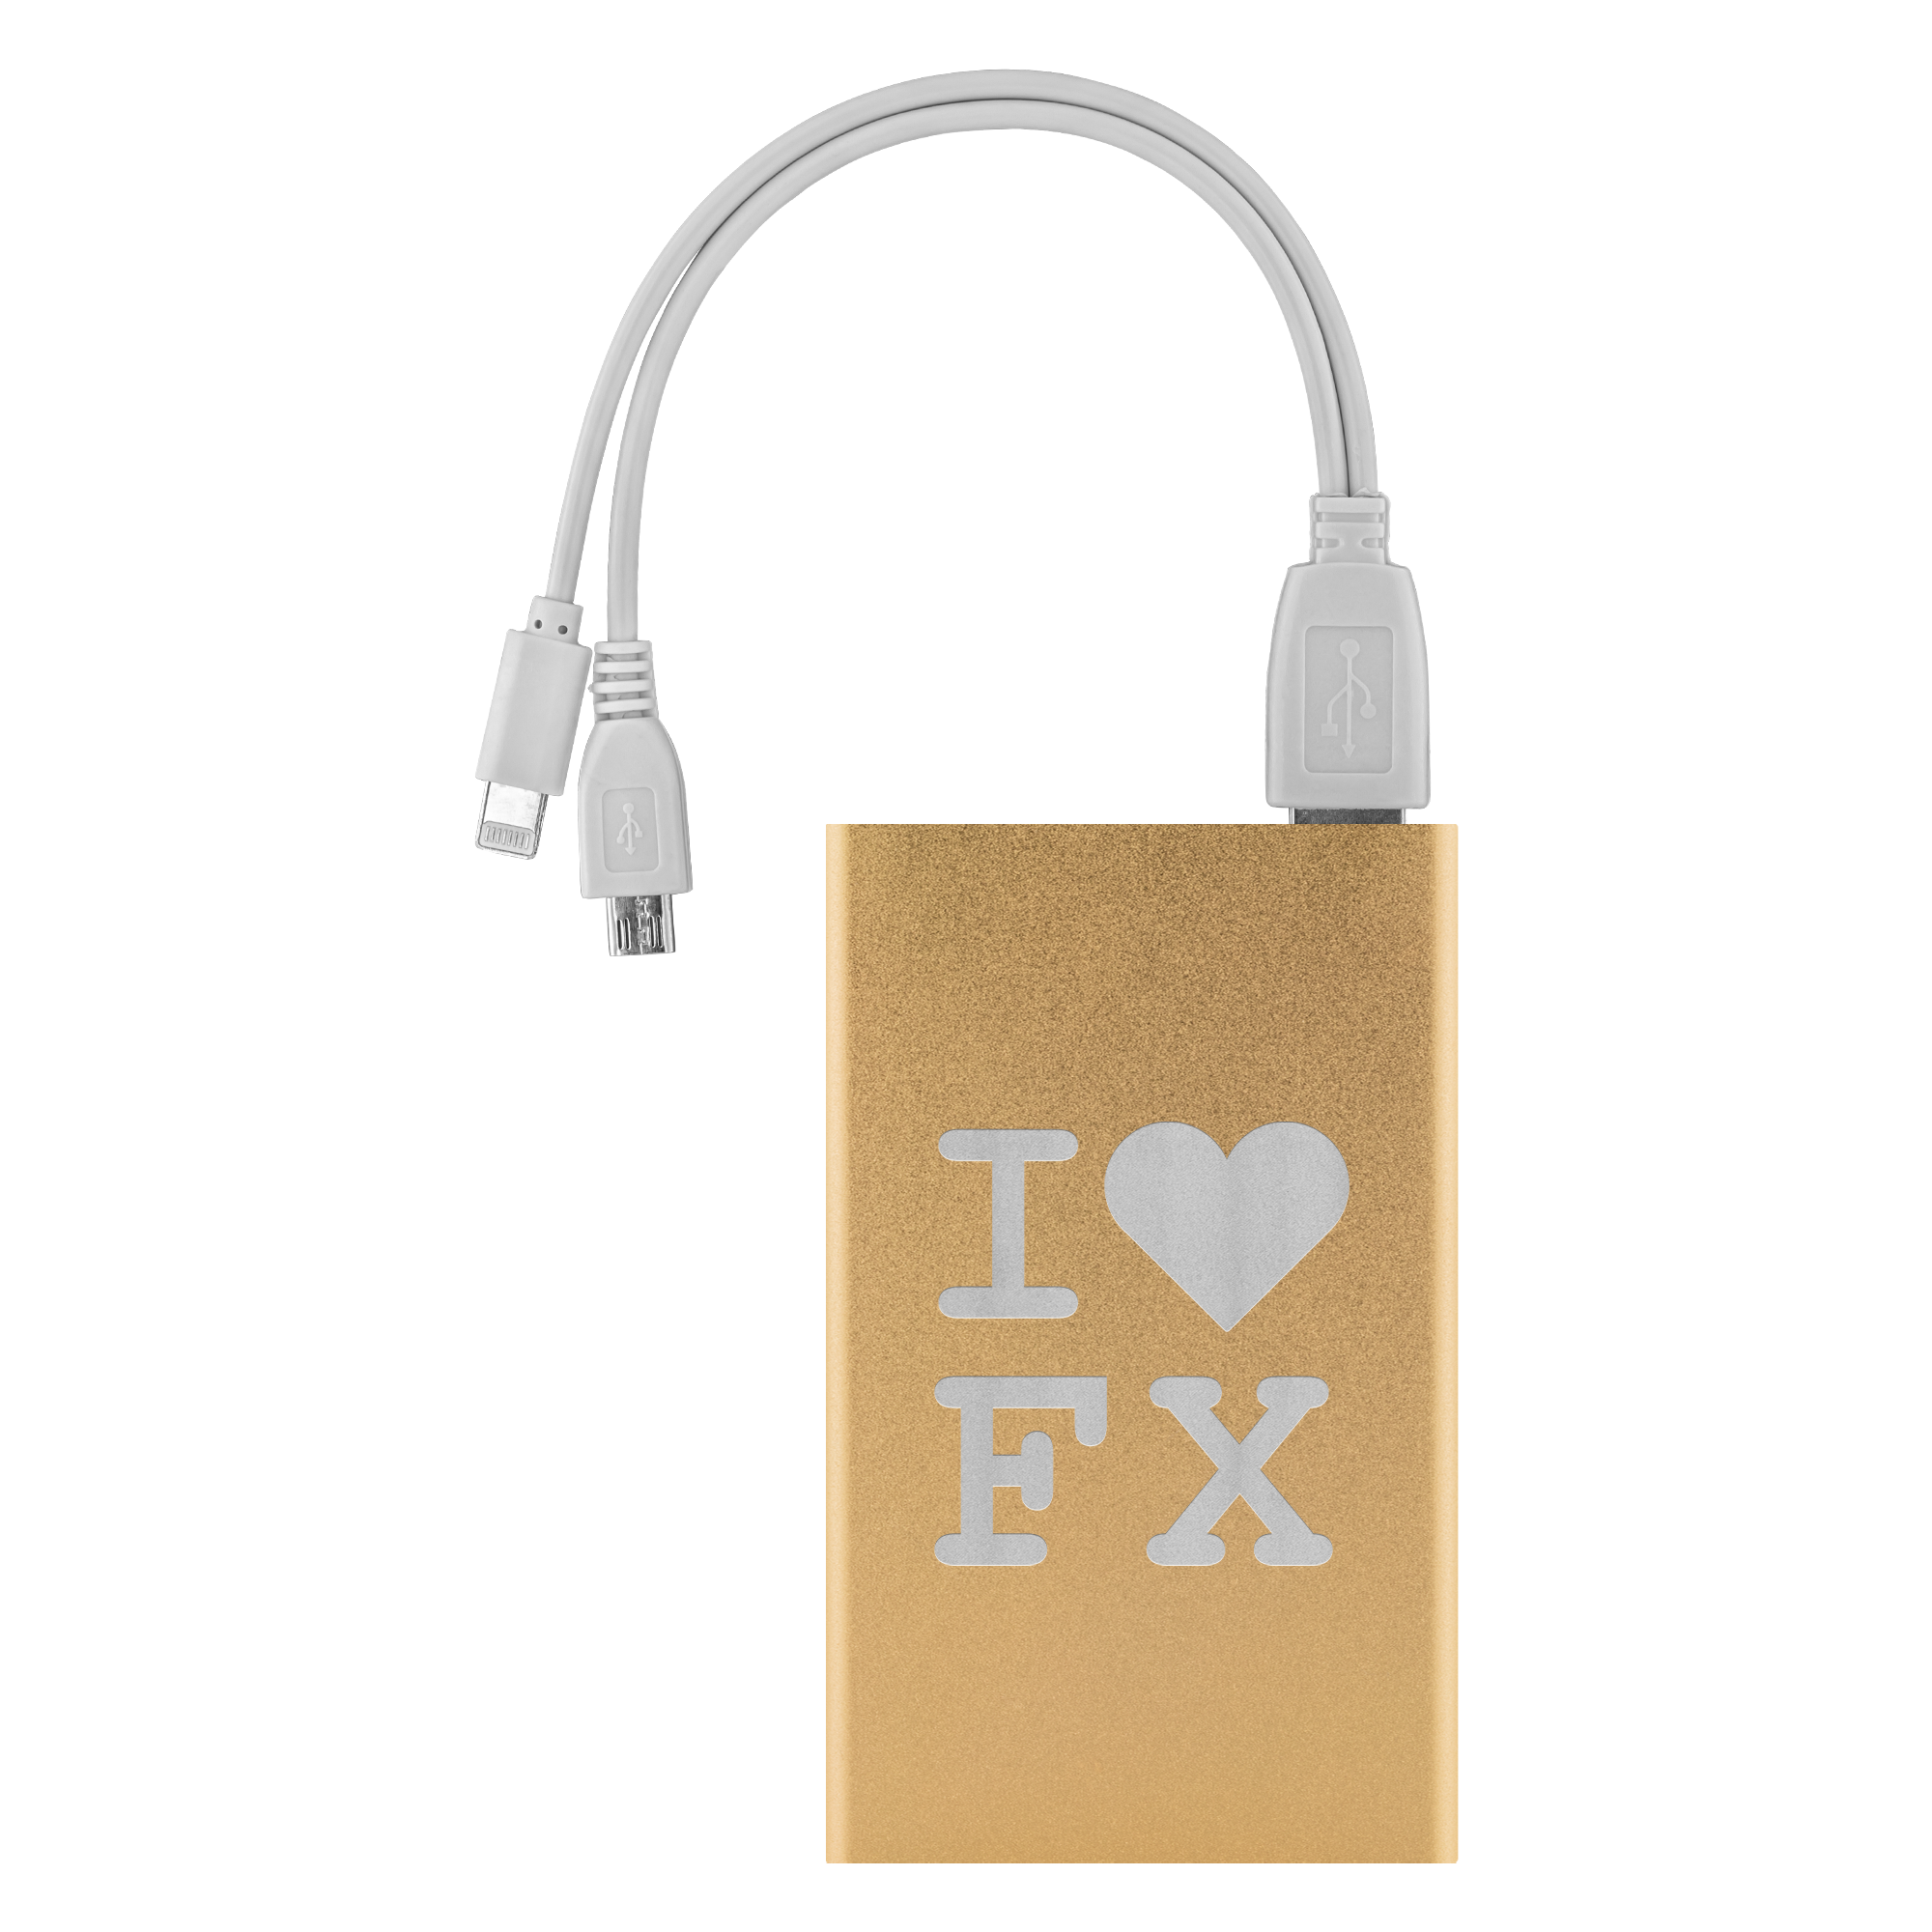 Buy gold Power Bank / I Love FX